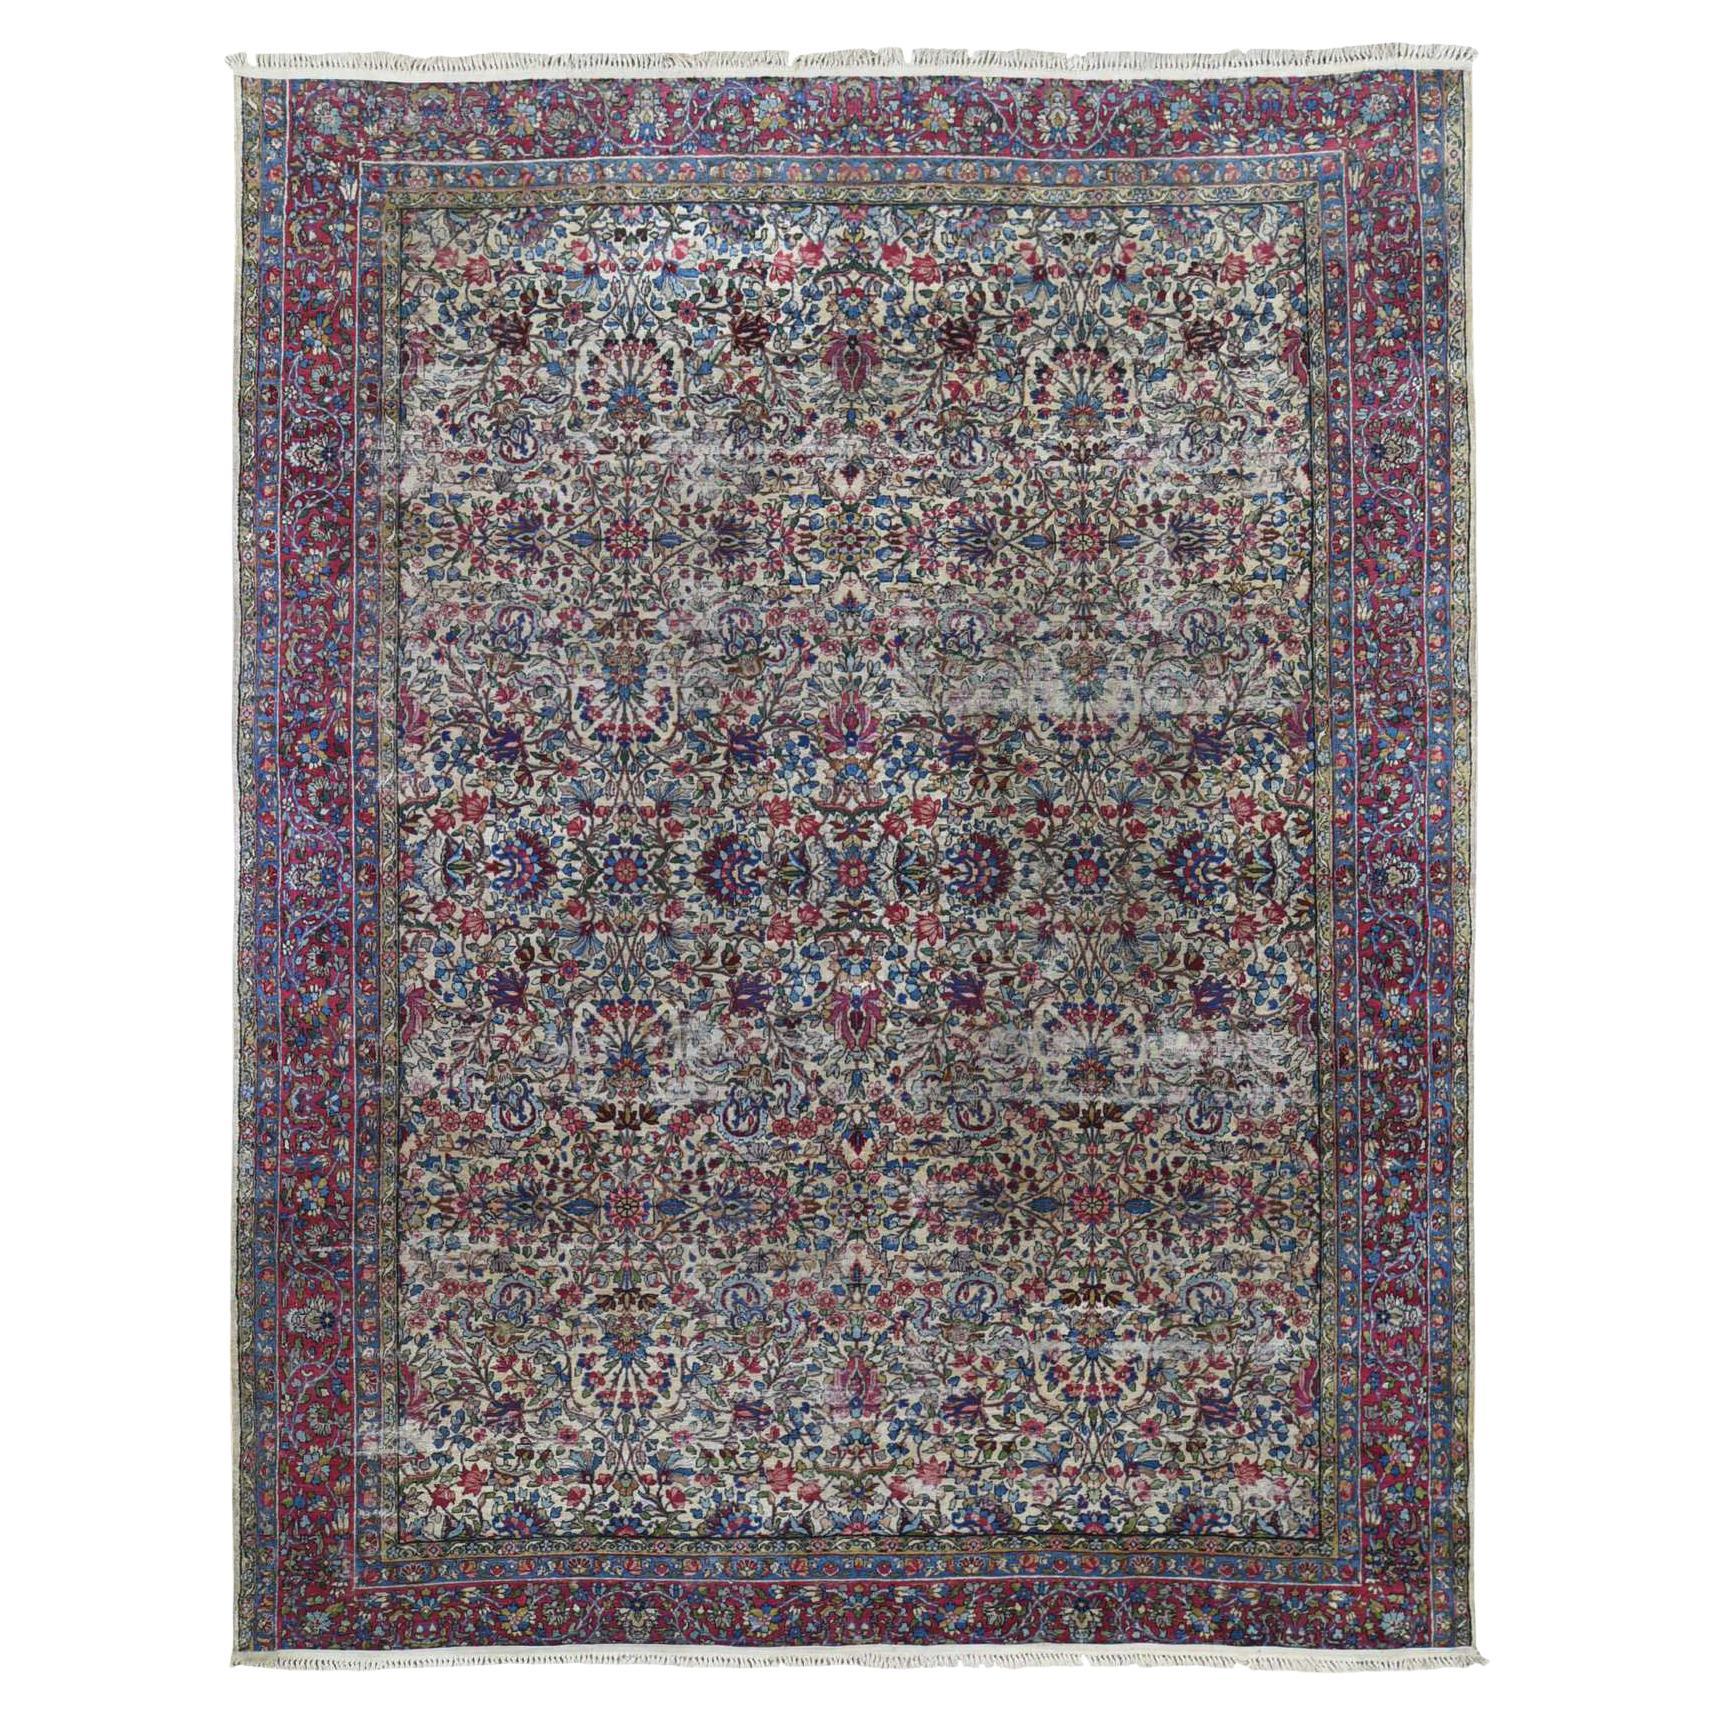 Beige Antique Persian Kerman with Areas of Wear, Distressed, Clean, Wool Rug